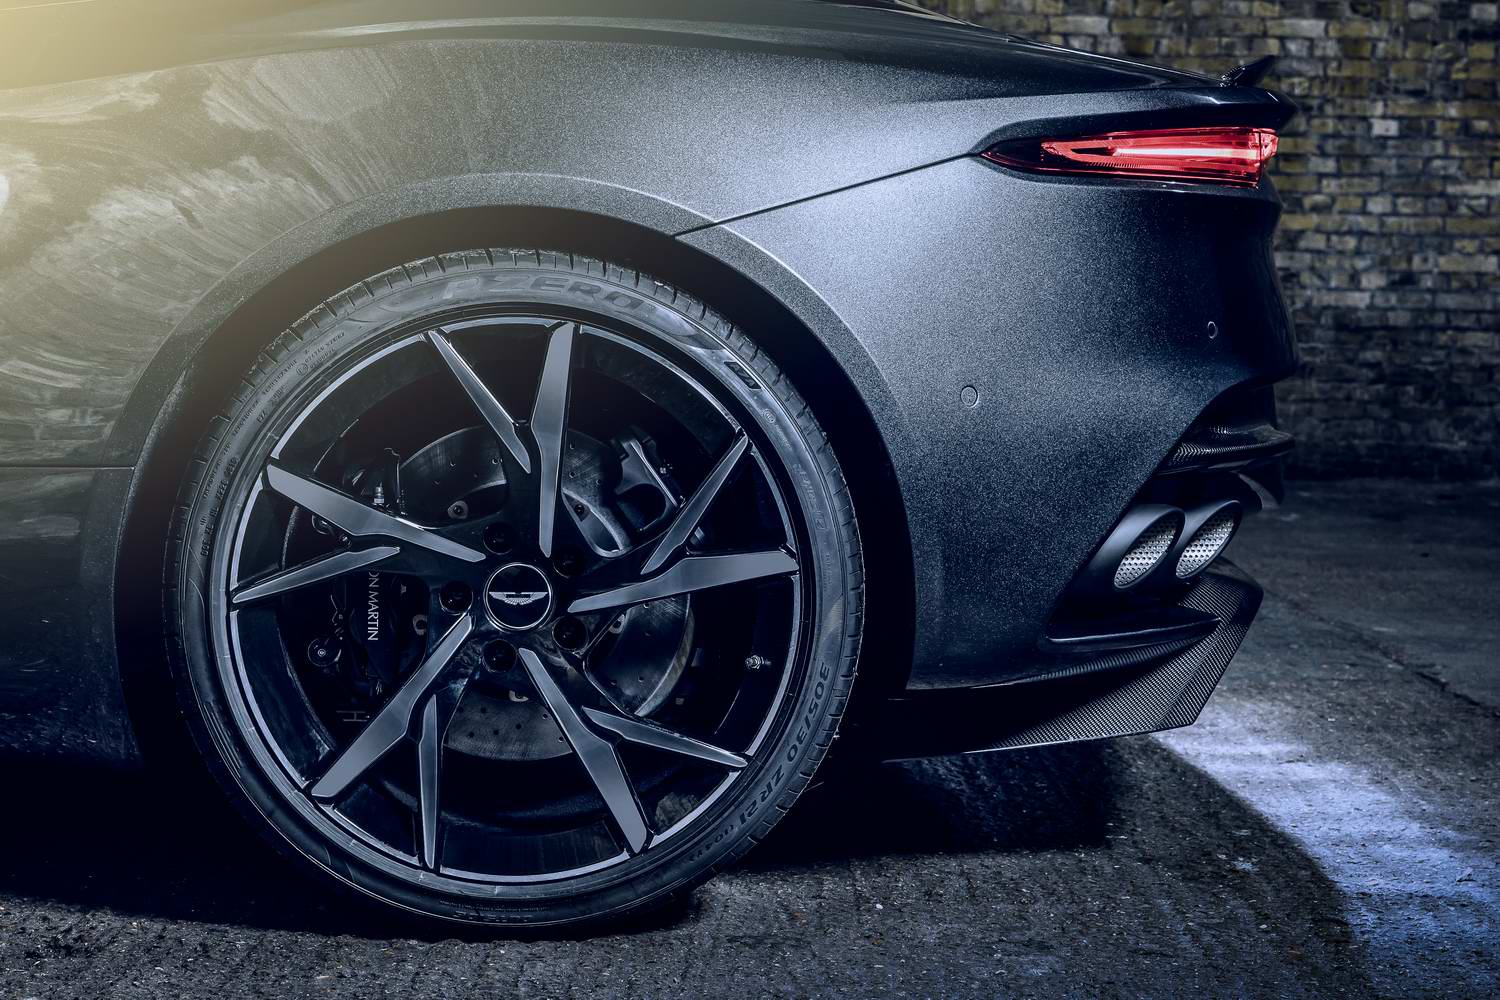 Aston Martin unveils 007 Editions